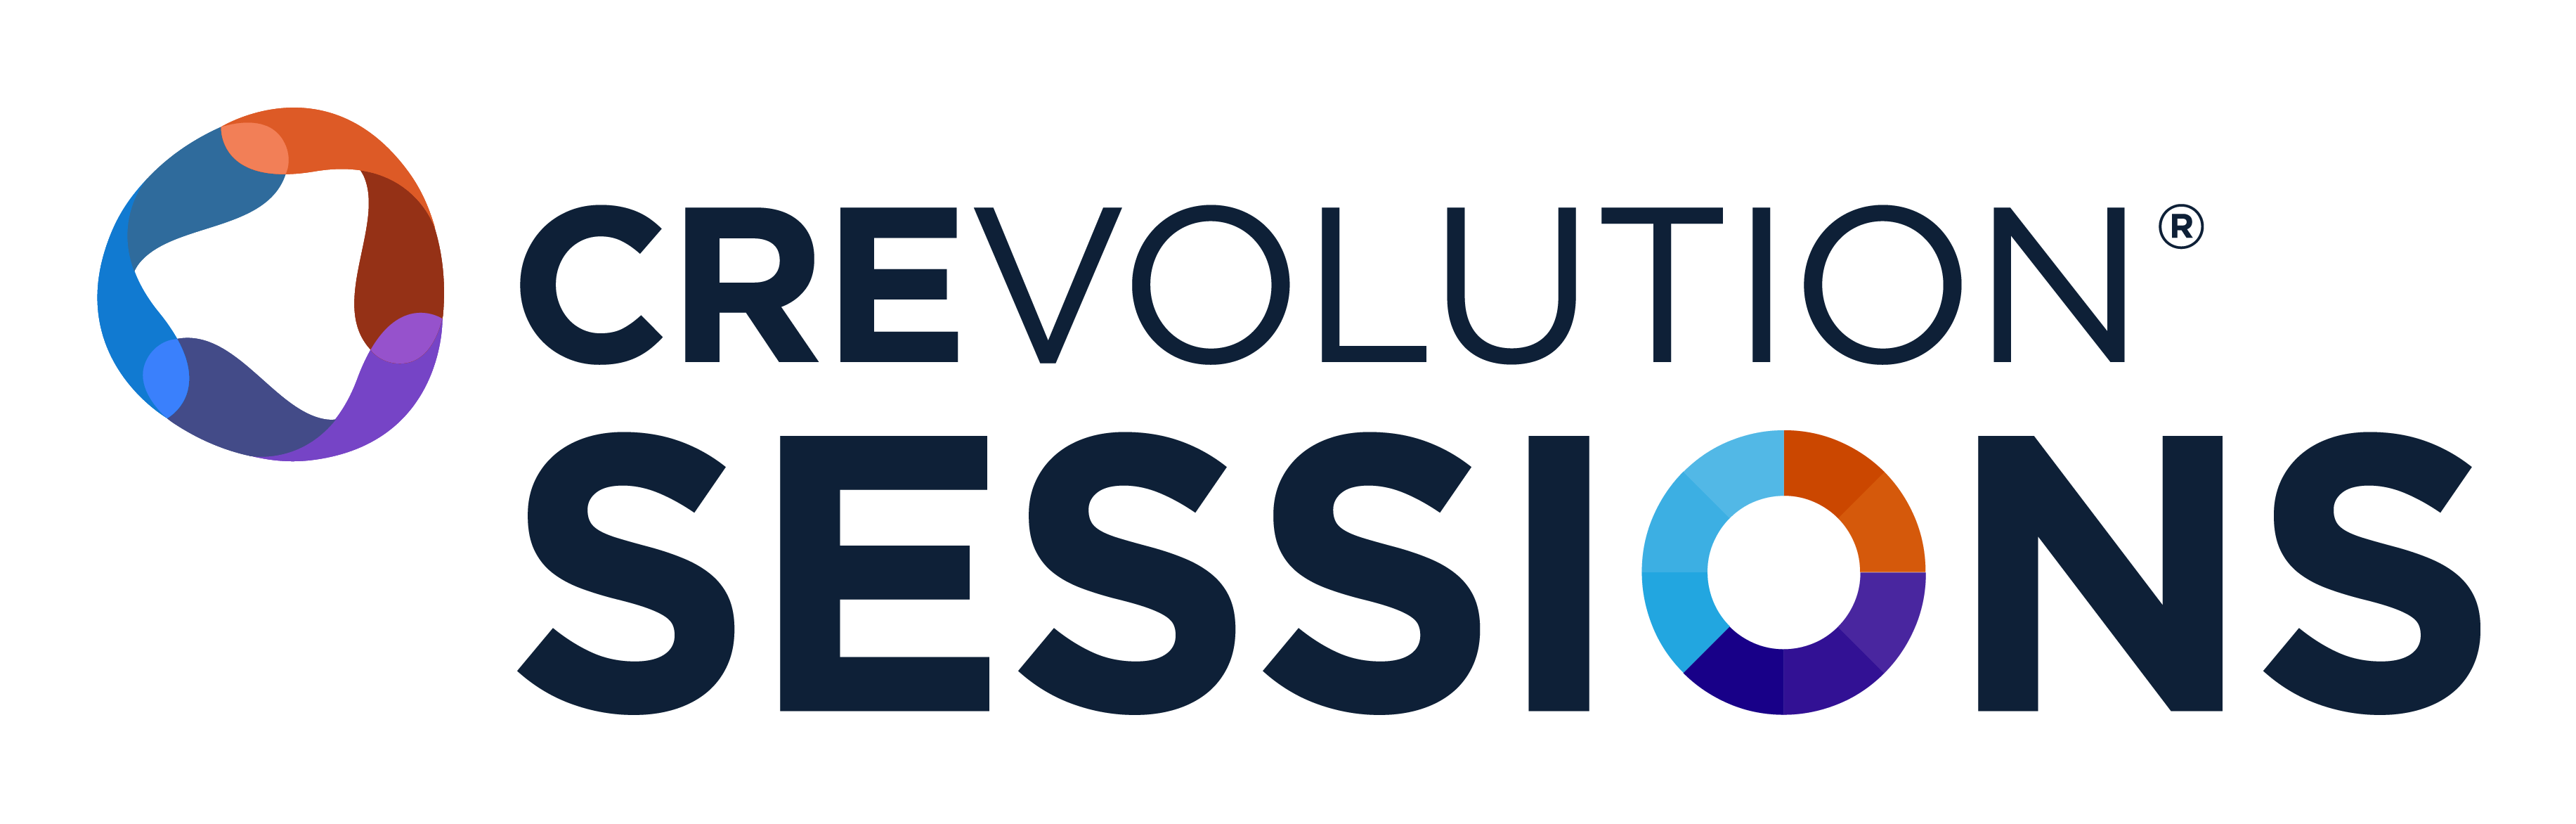 Crevolution-SESSIONS